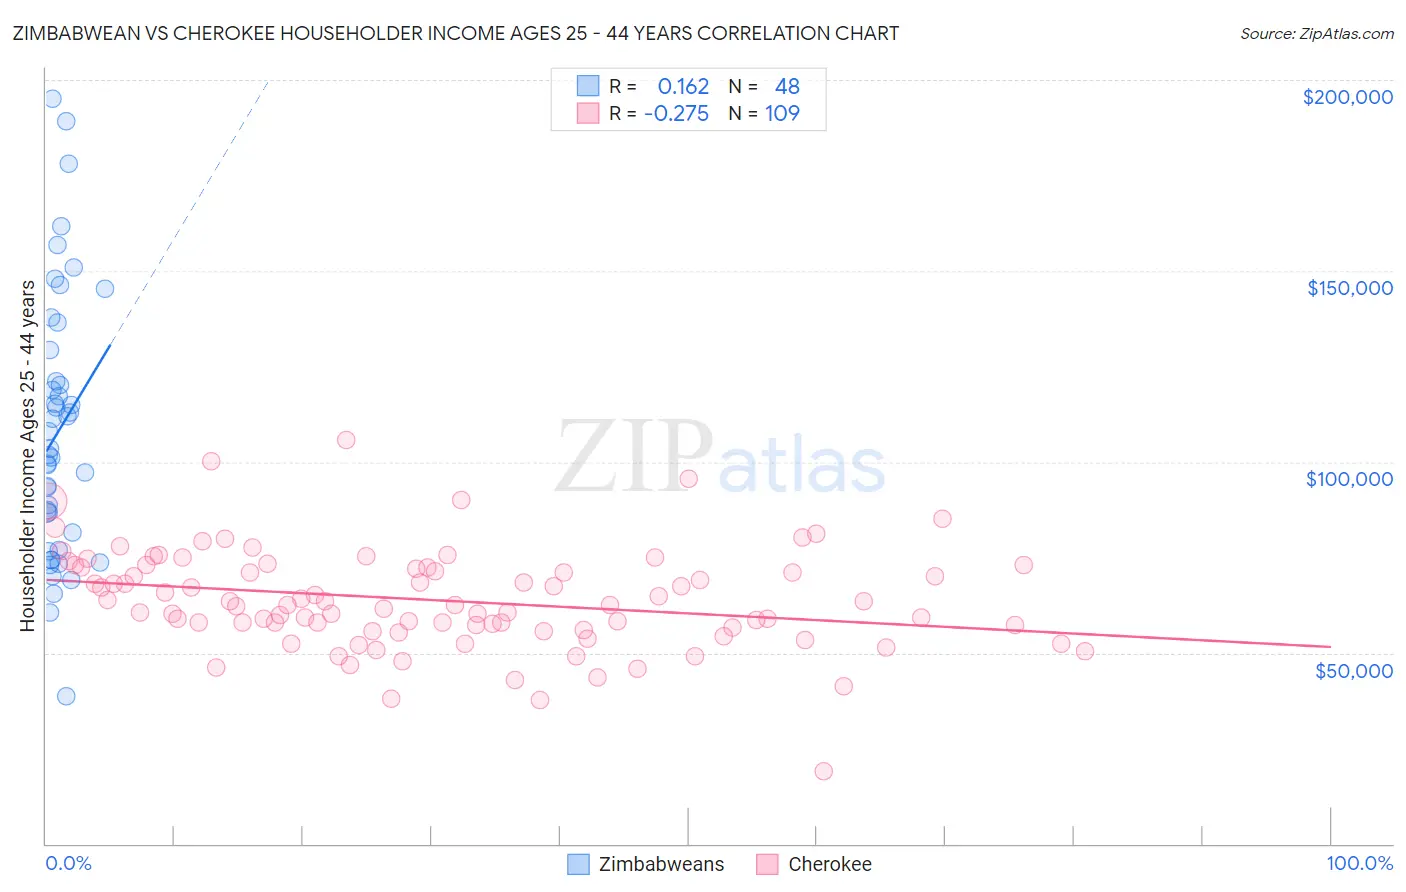 Zimbabwean vs Cherokee Householder Income Ages 25 - 44 years